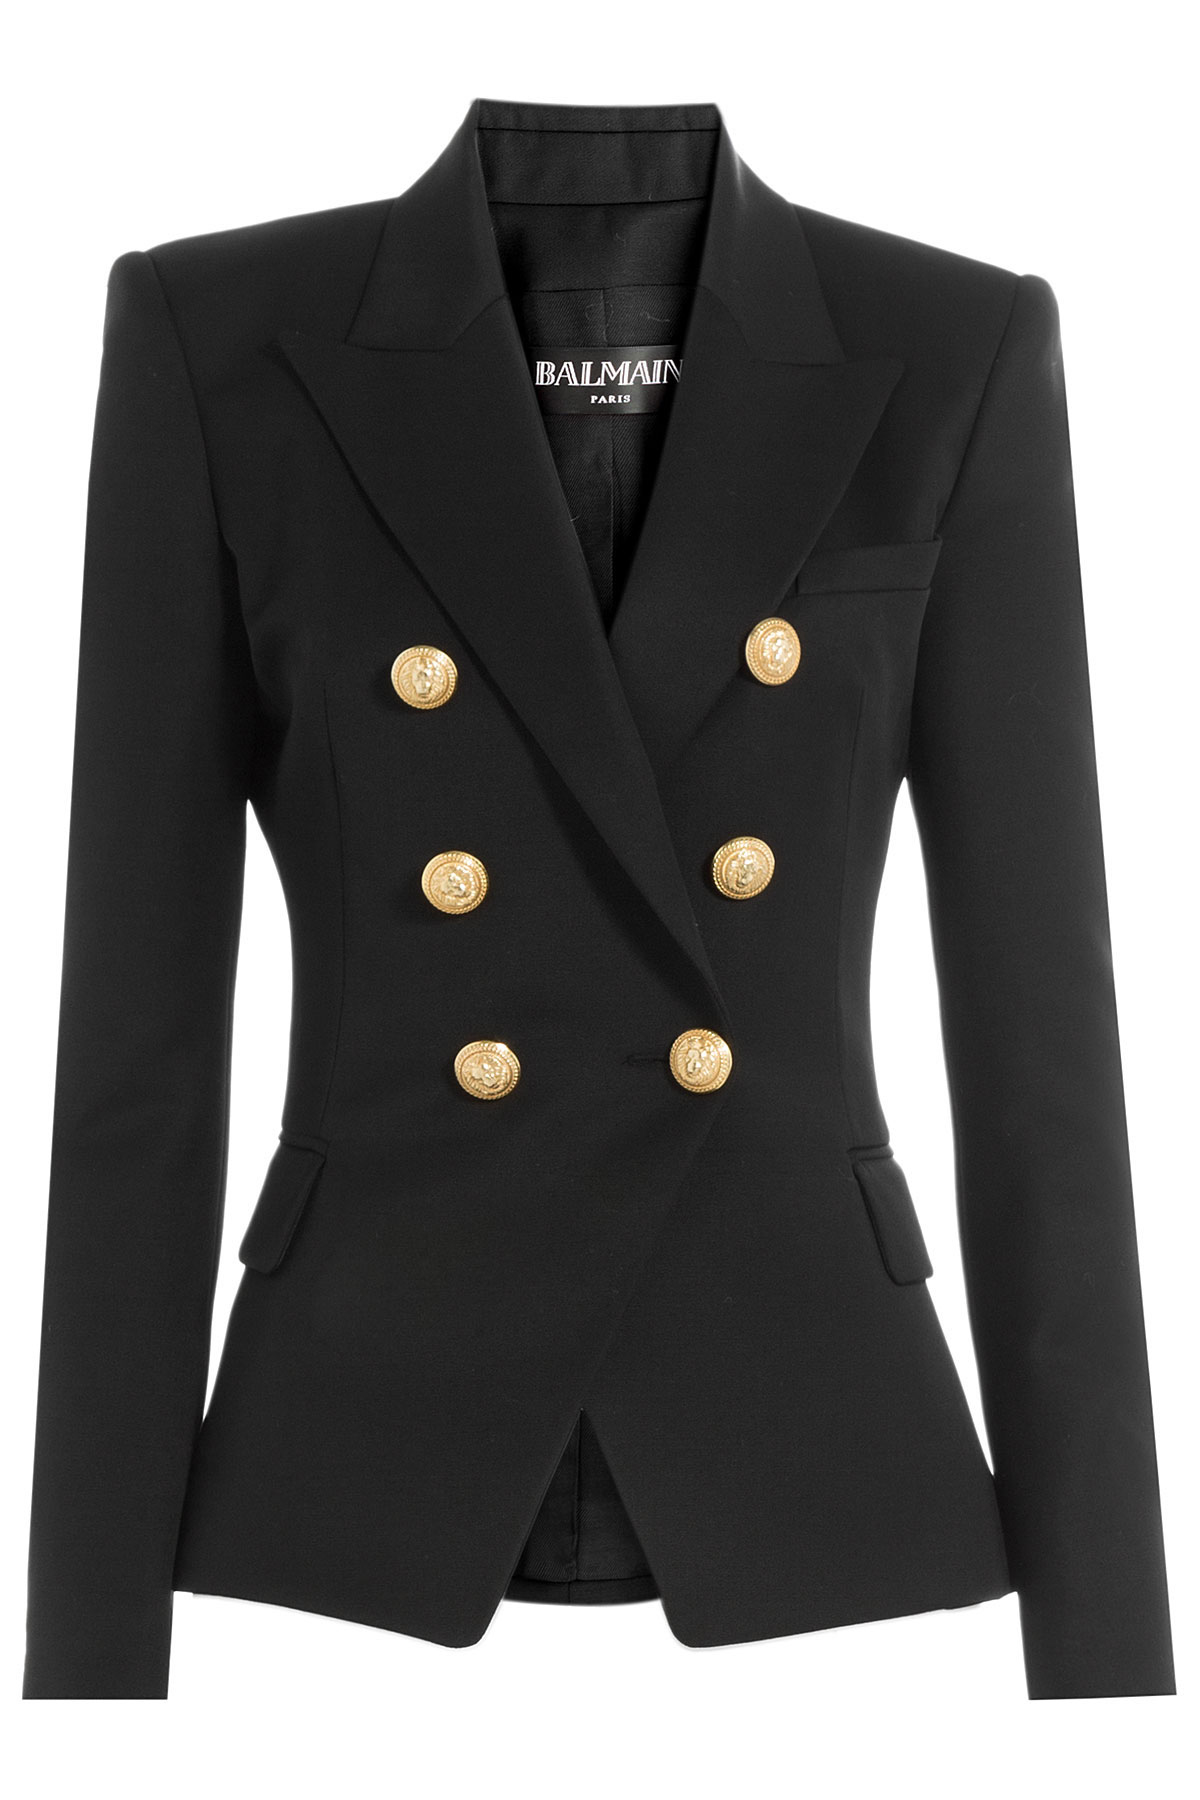 Balmain Virgin Wool Jacket in Black | Lyst